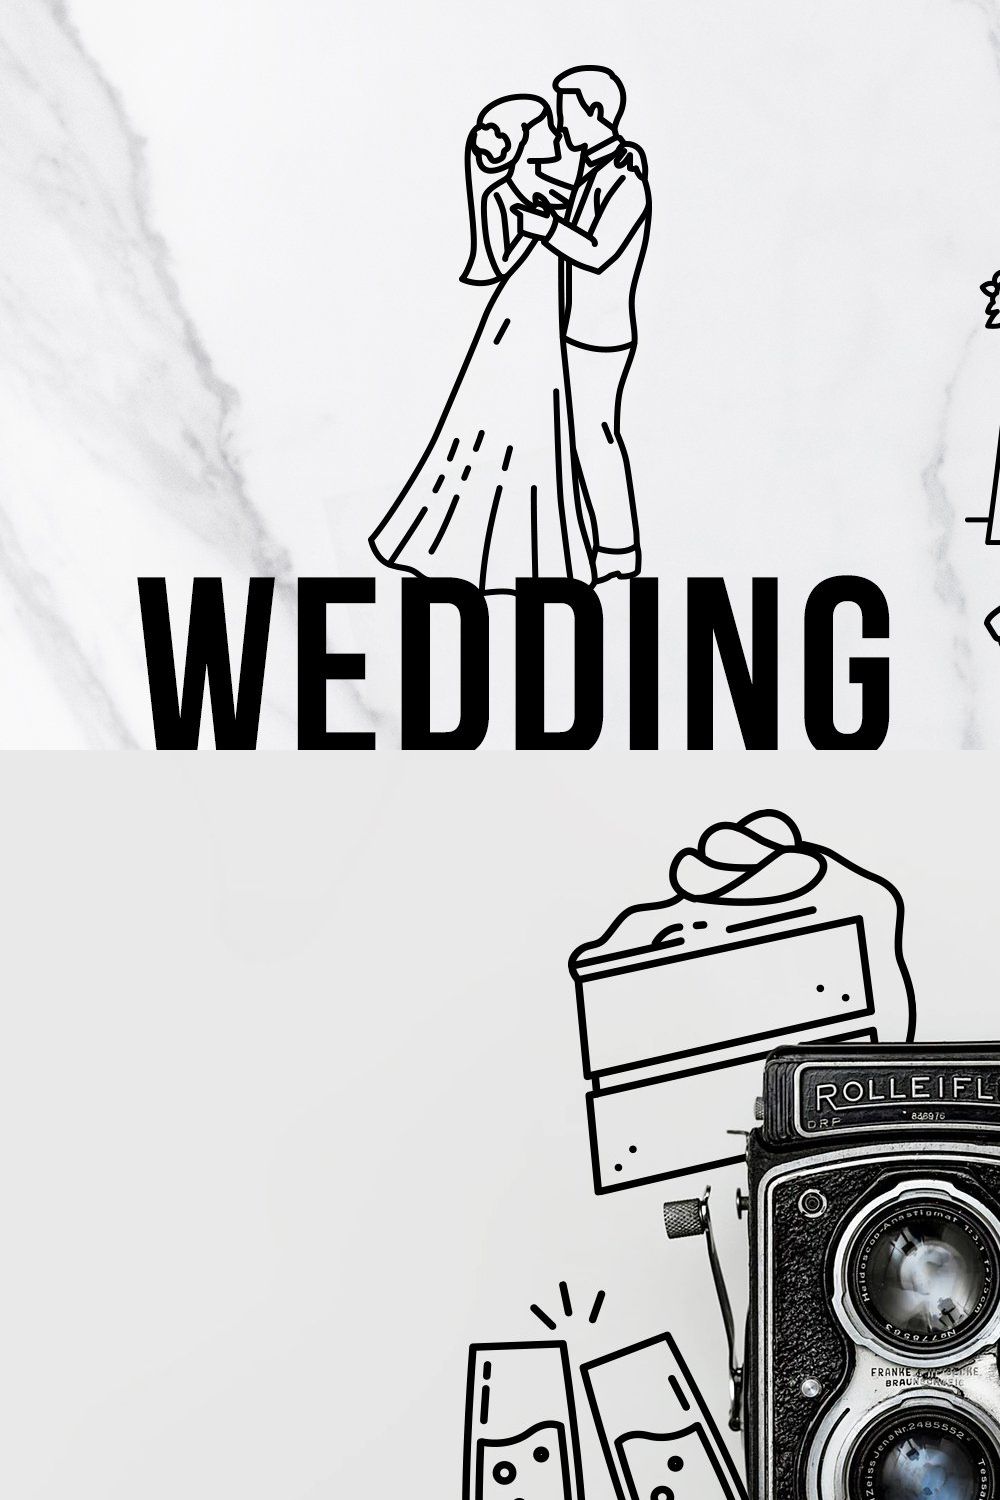 42 Romantic Wedding Icons - Love pinterest preview image.